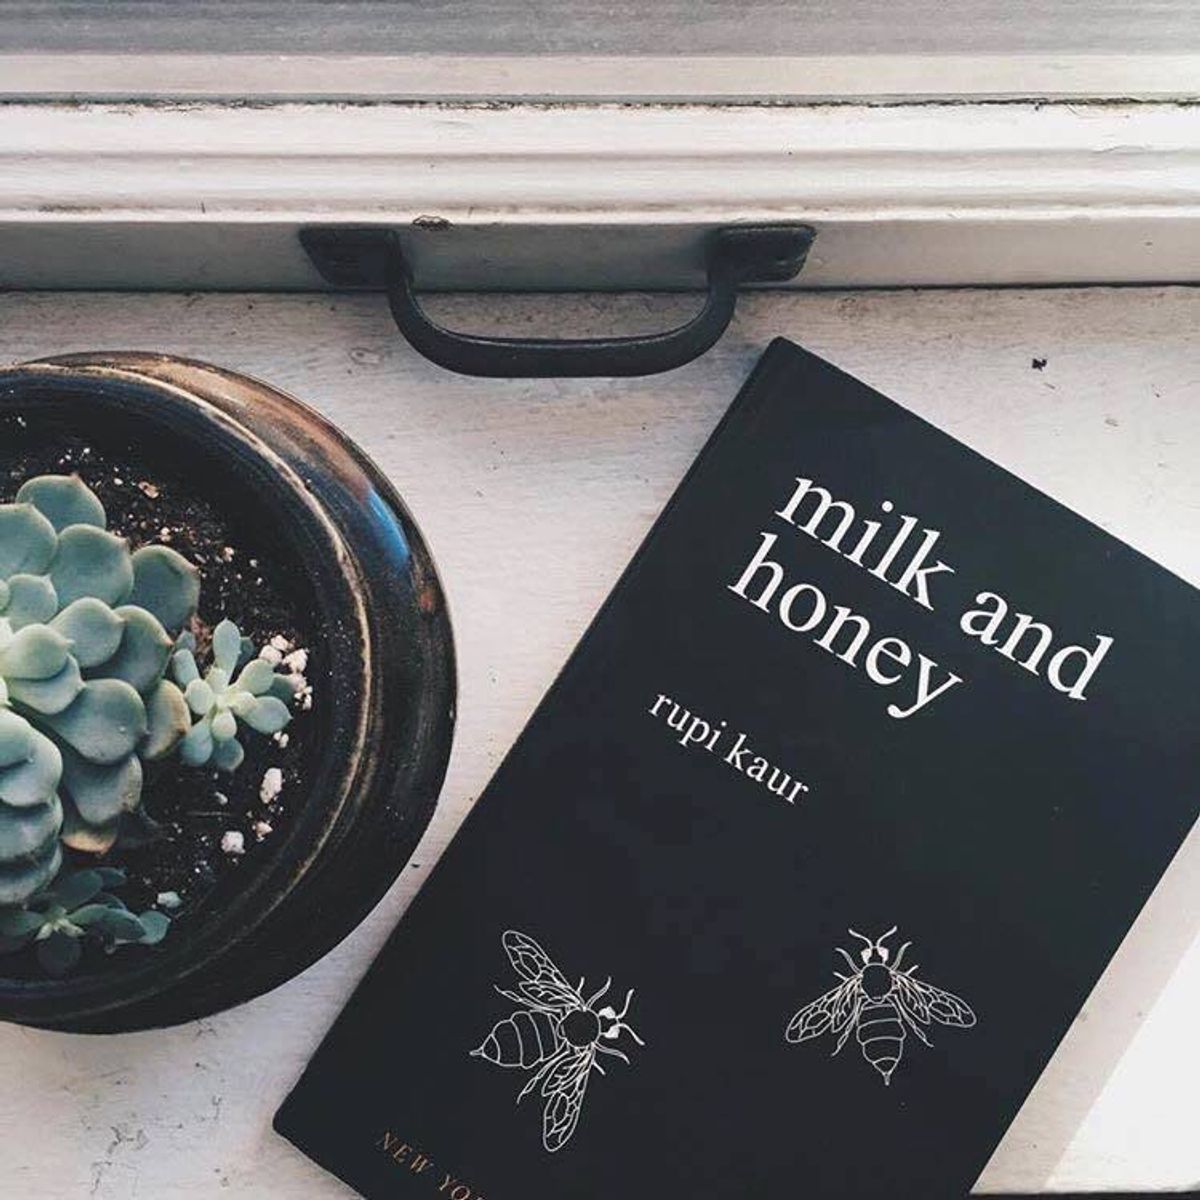 Top 10 "Milk and Honey" Poems